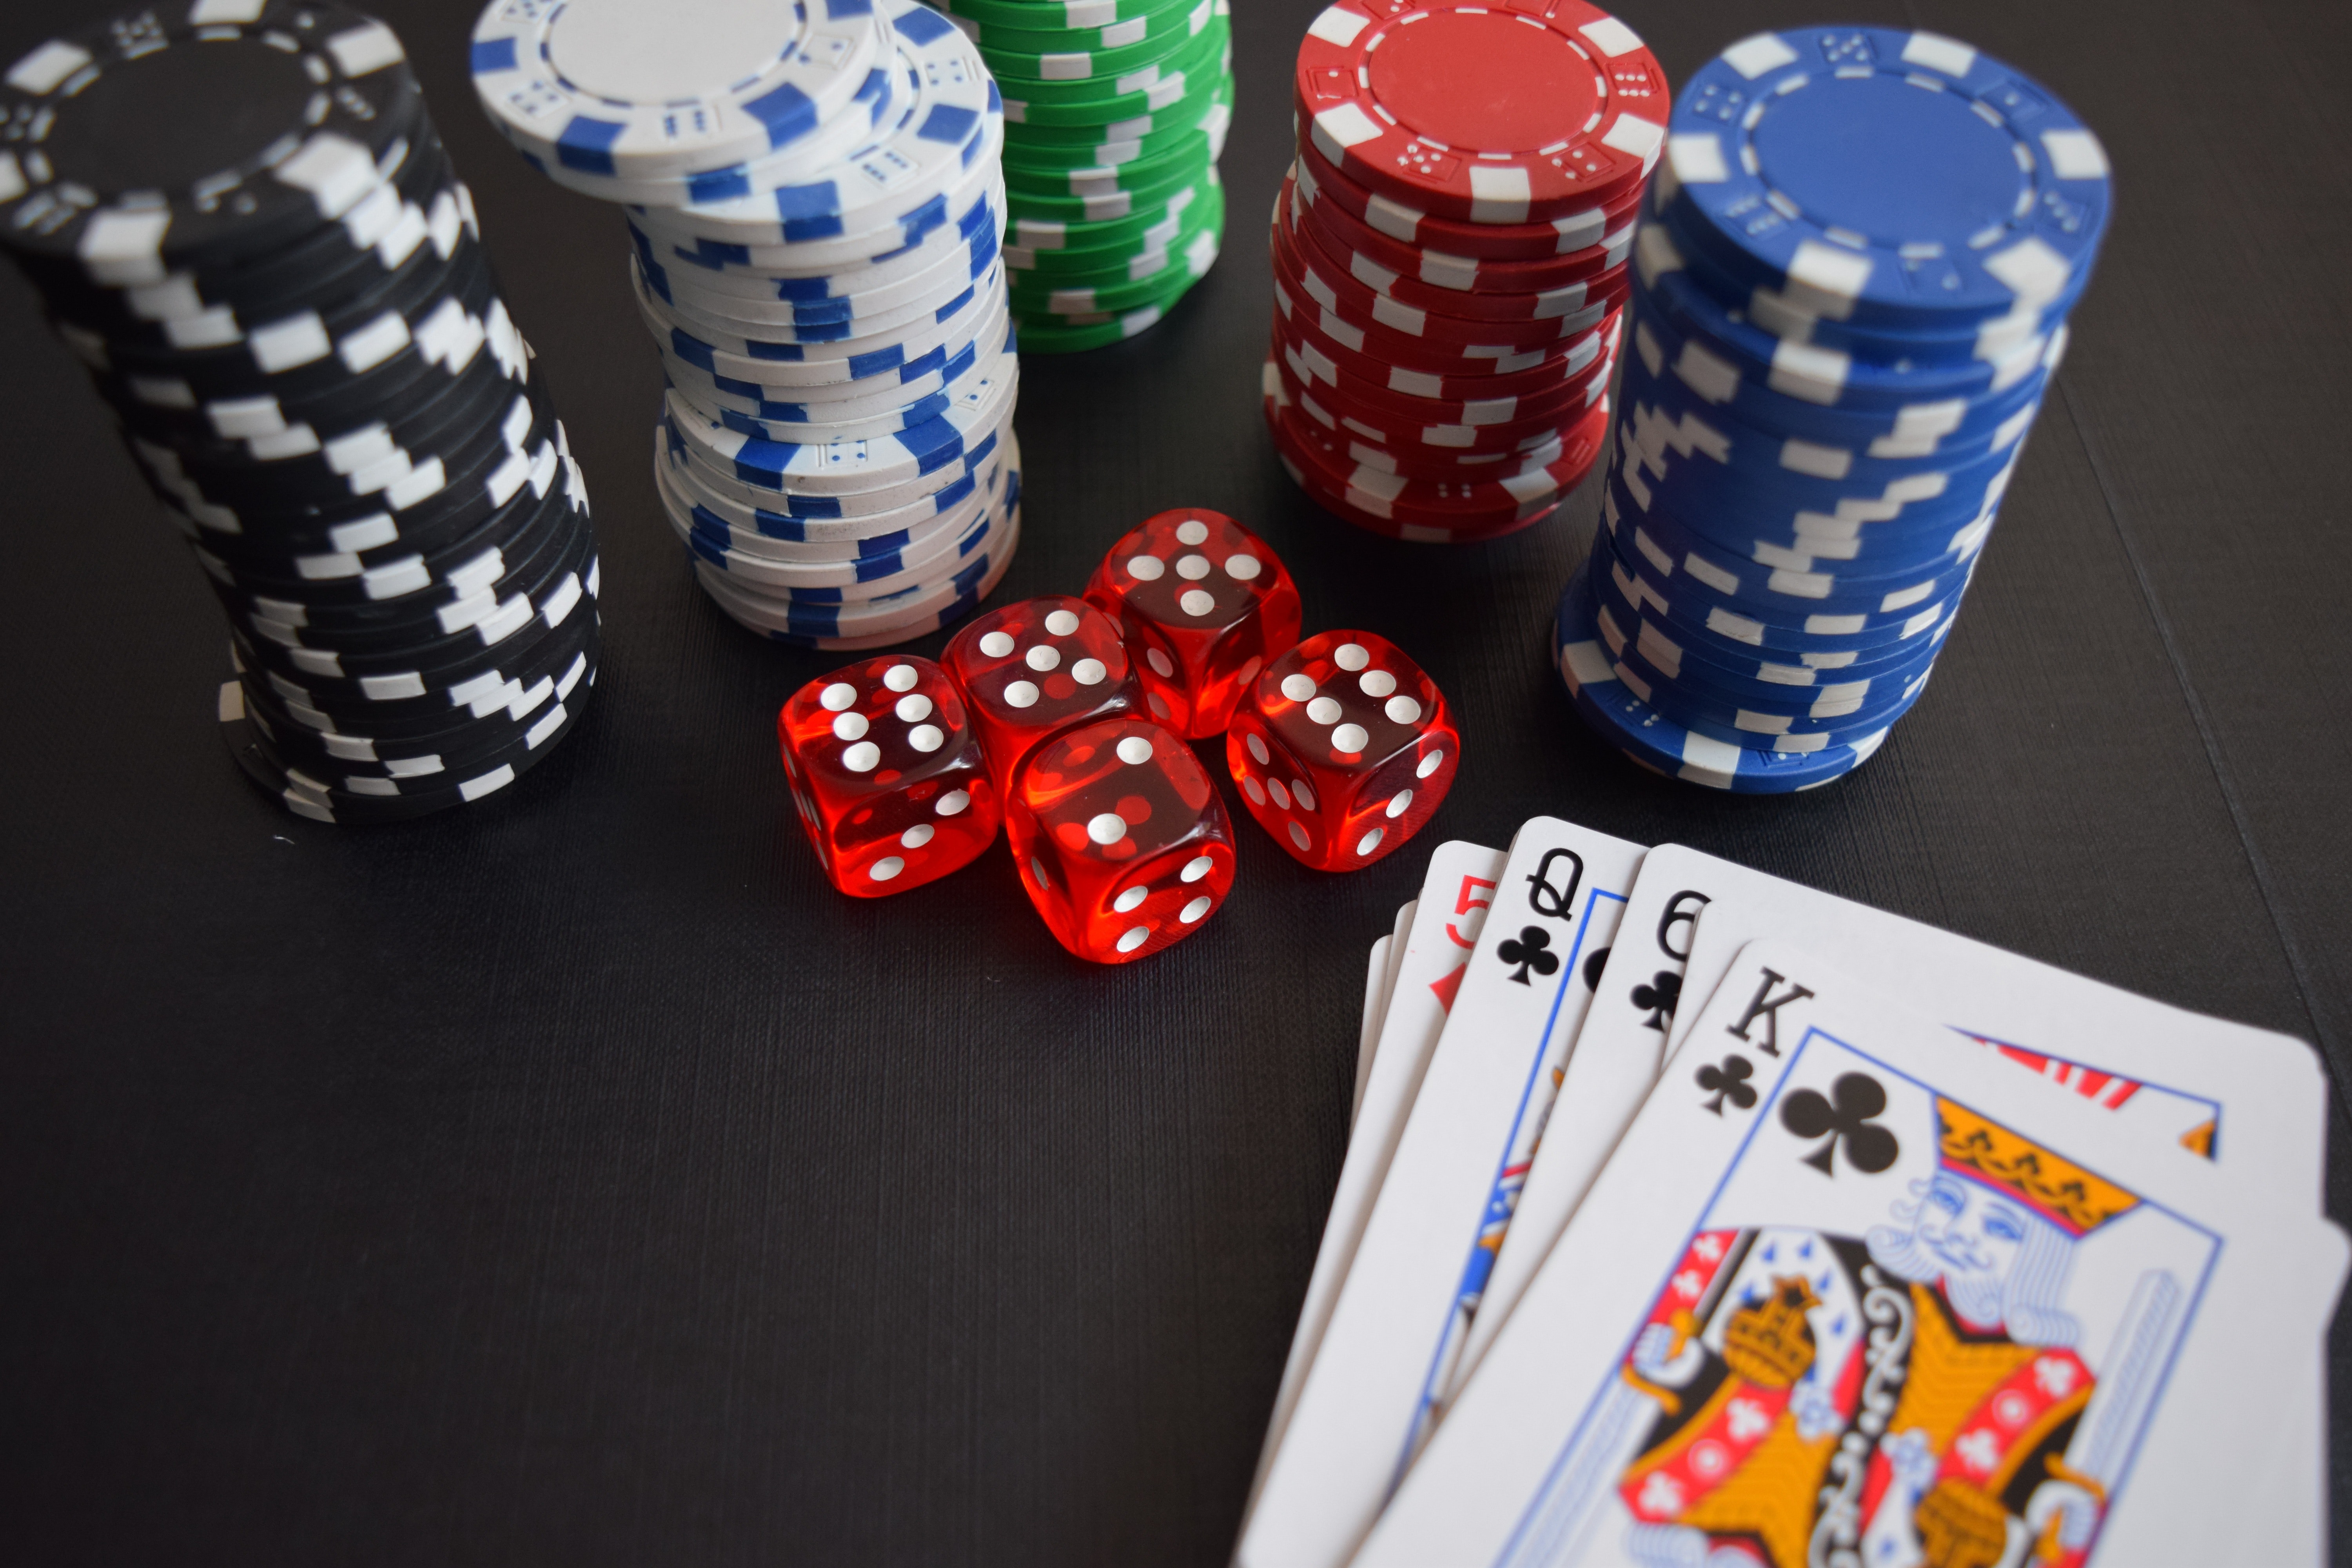 How poker became a celebrity hobby